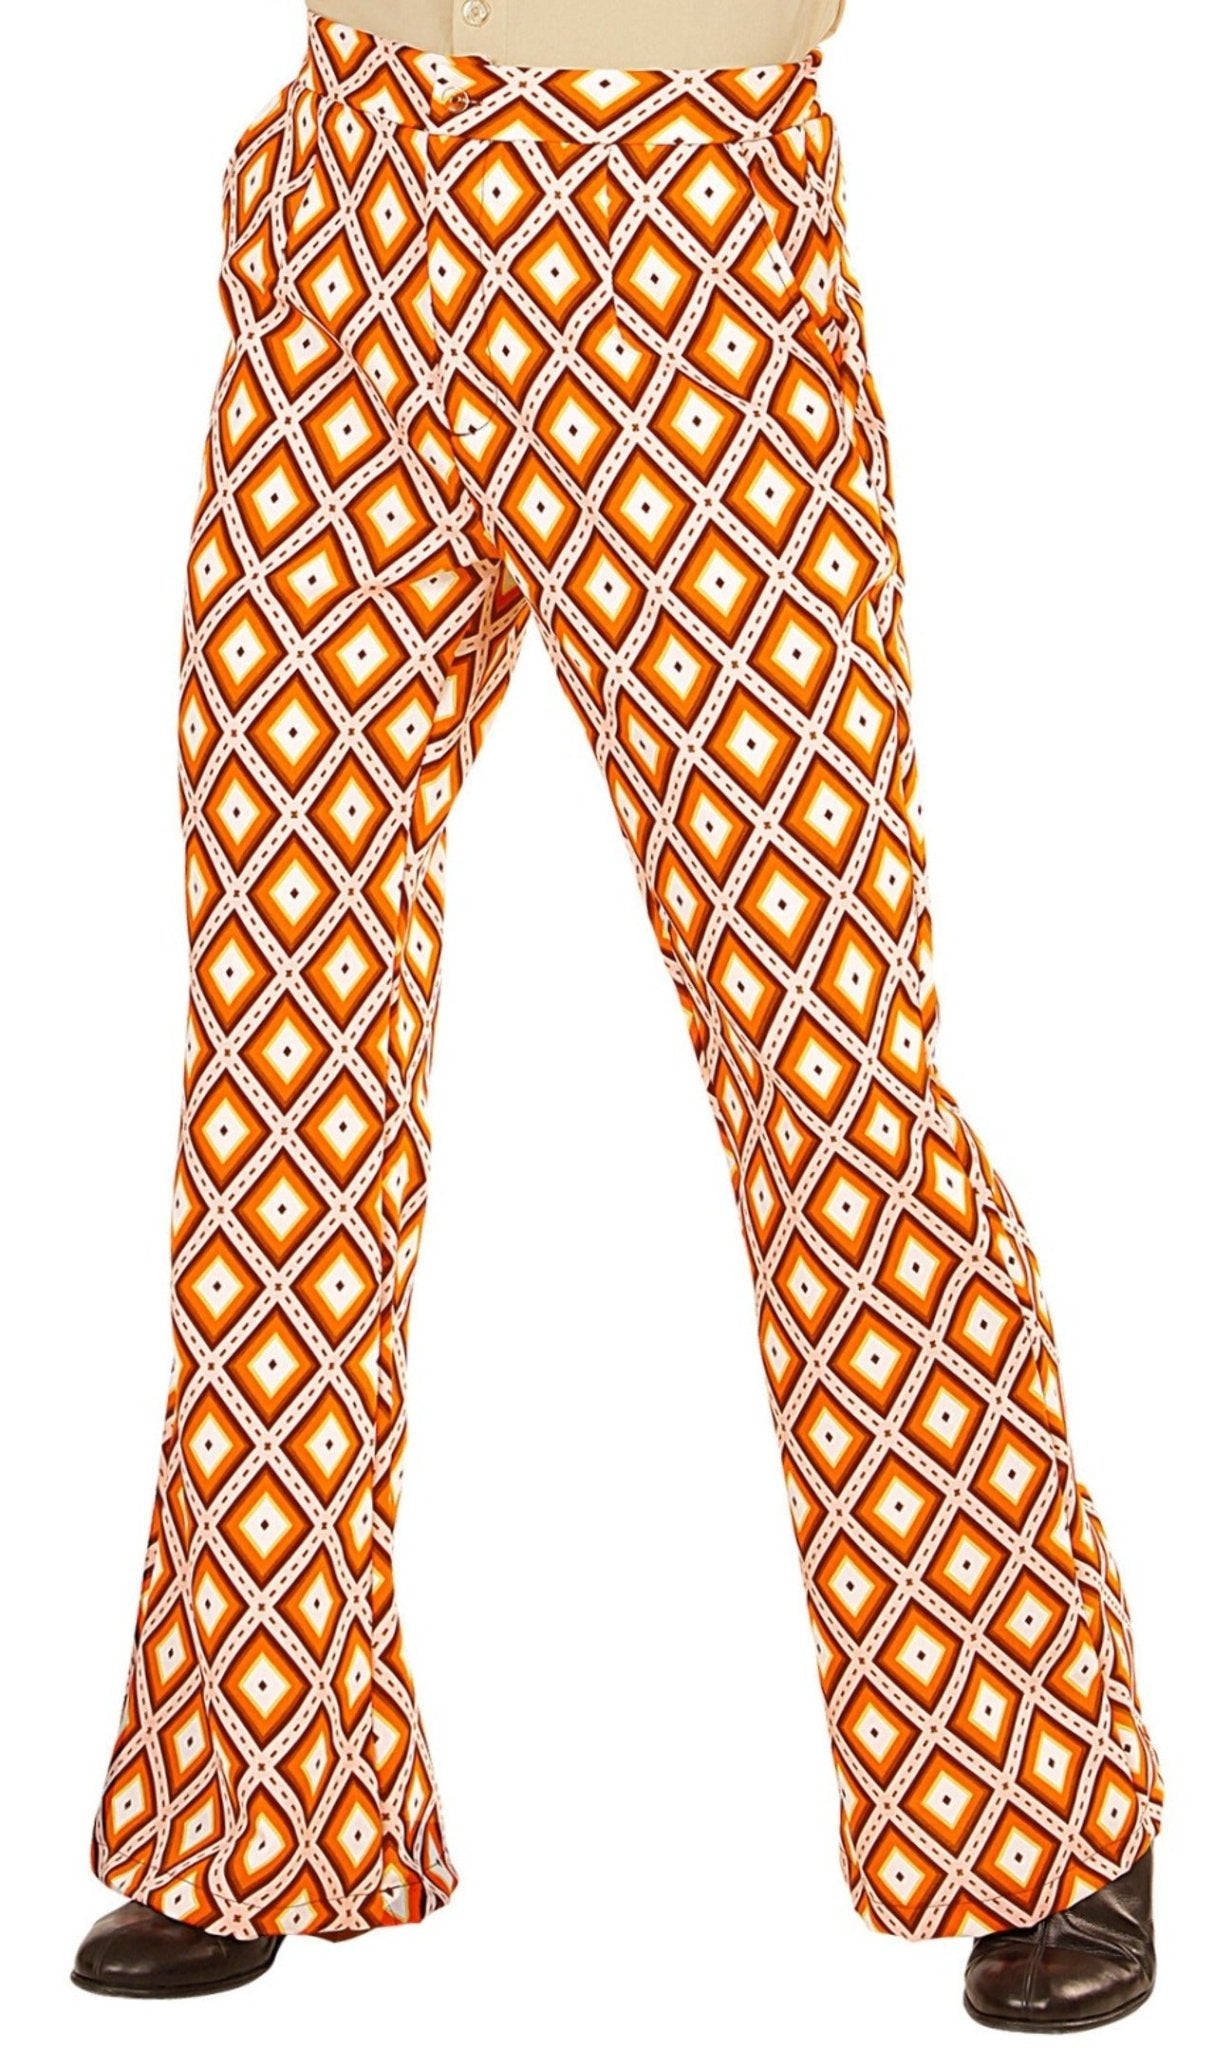 Pantalón de Campana Años 70 Naranja para Hombre